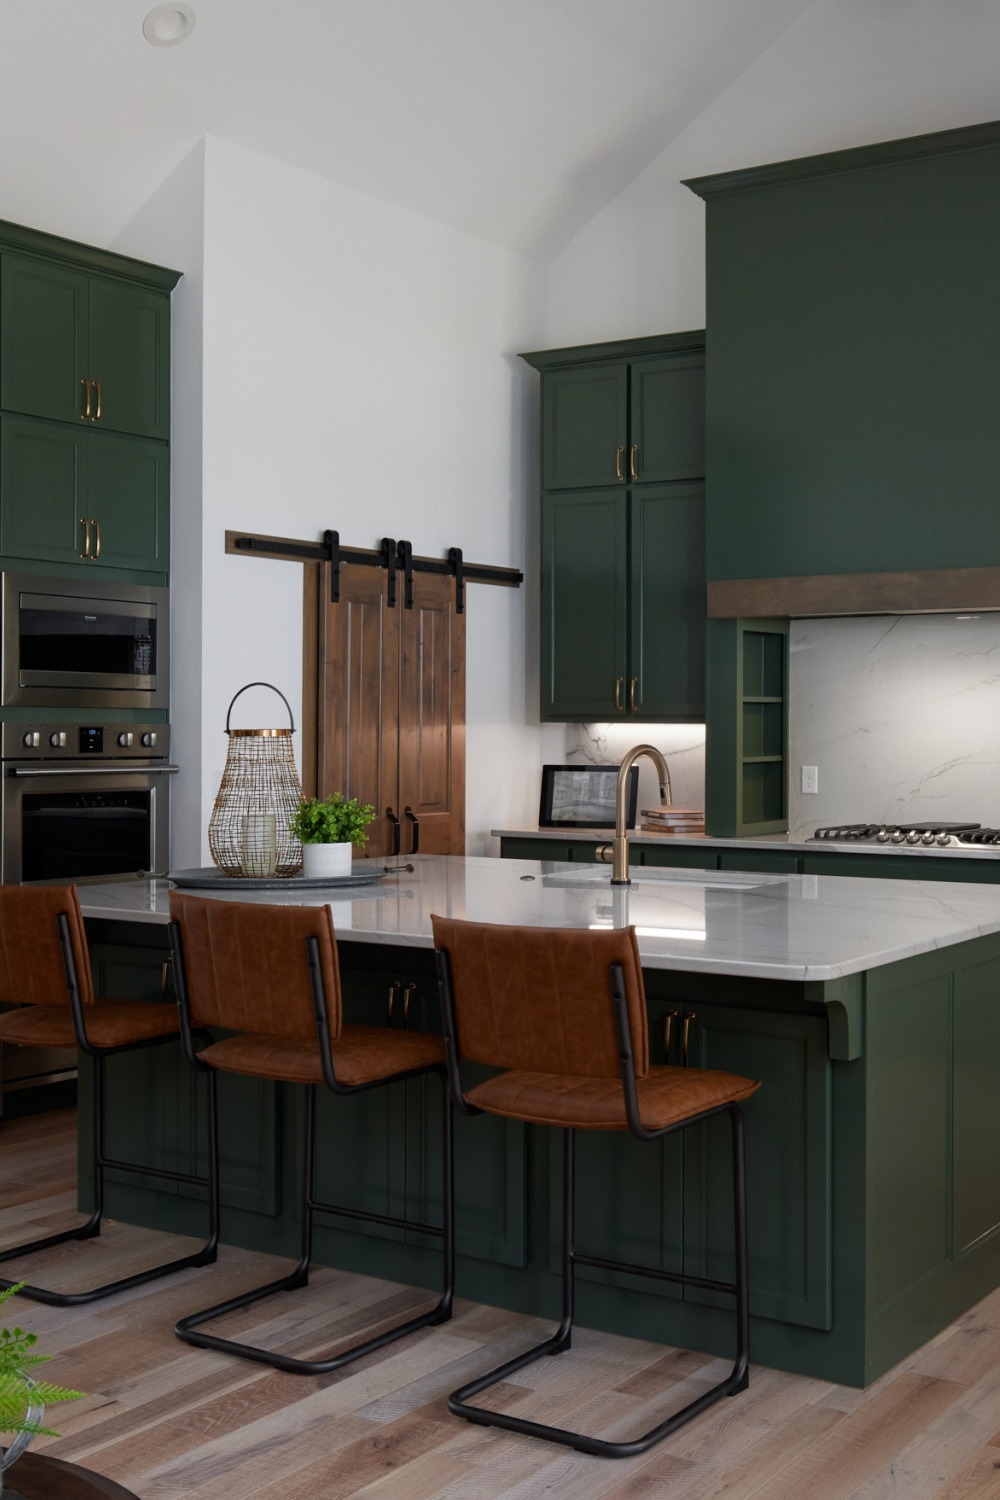 Quartz Countertops Sage Green Cabinets Undermount Sink White Backsplash Ideas Light